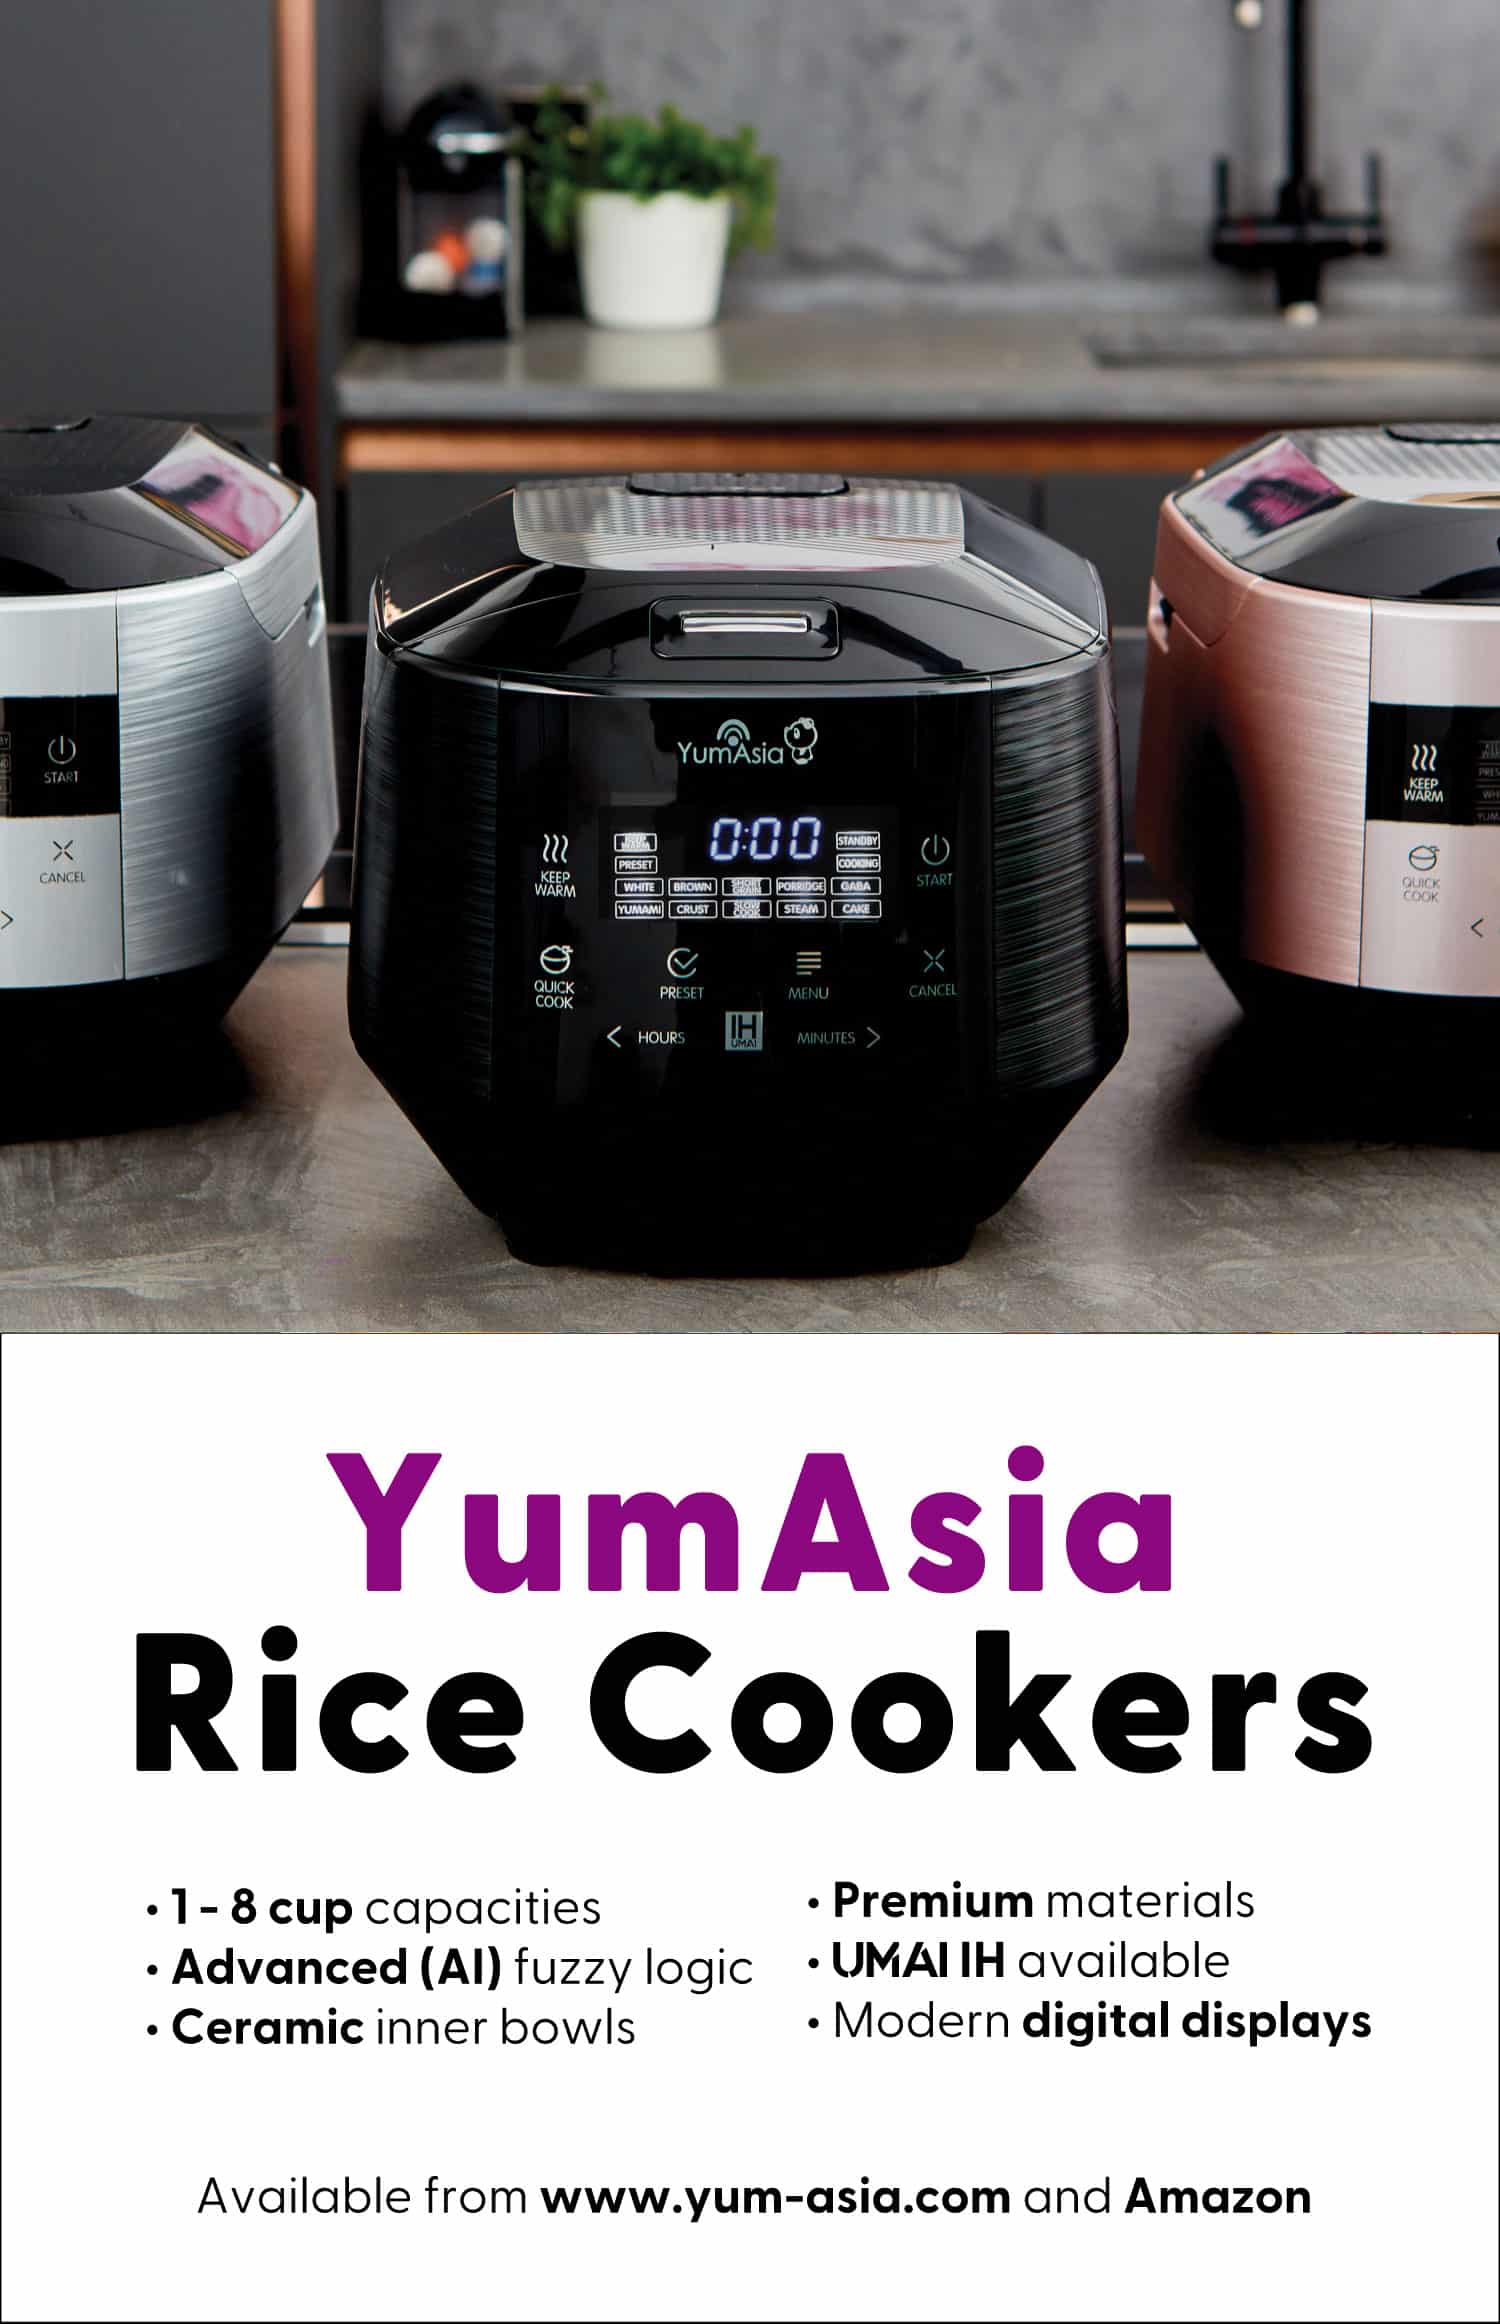 Yum Asia Sakura Rice Cooker with Ceramic Bowl and Advanced Fuzzy